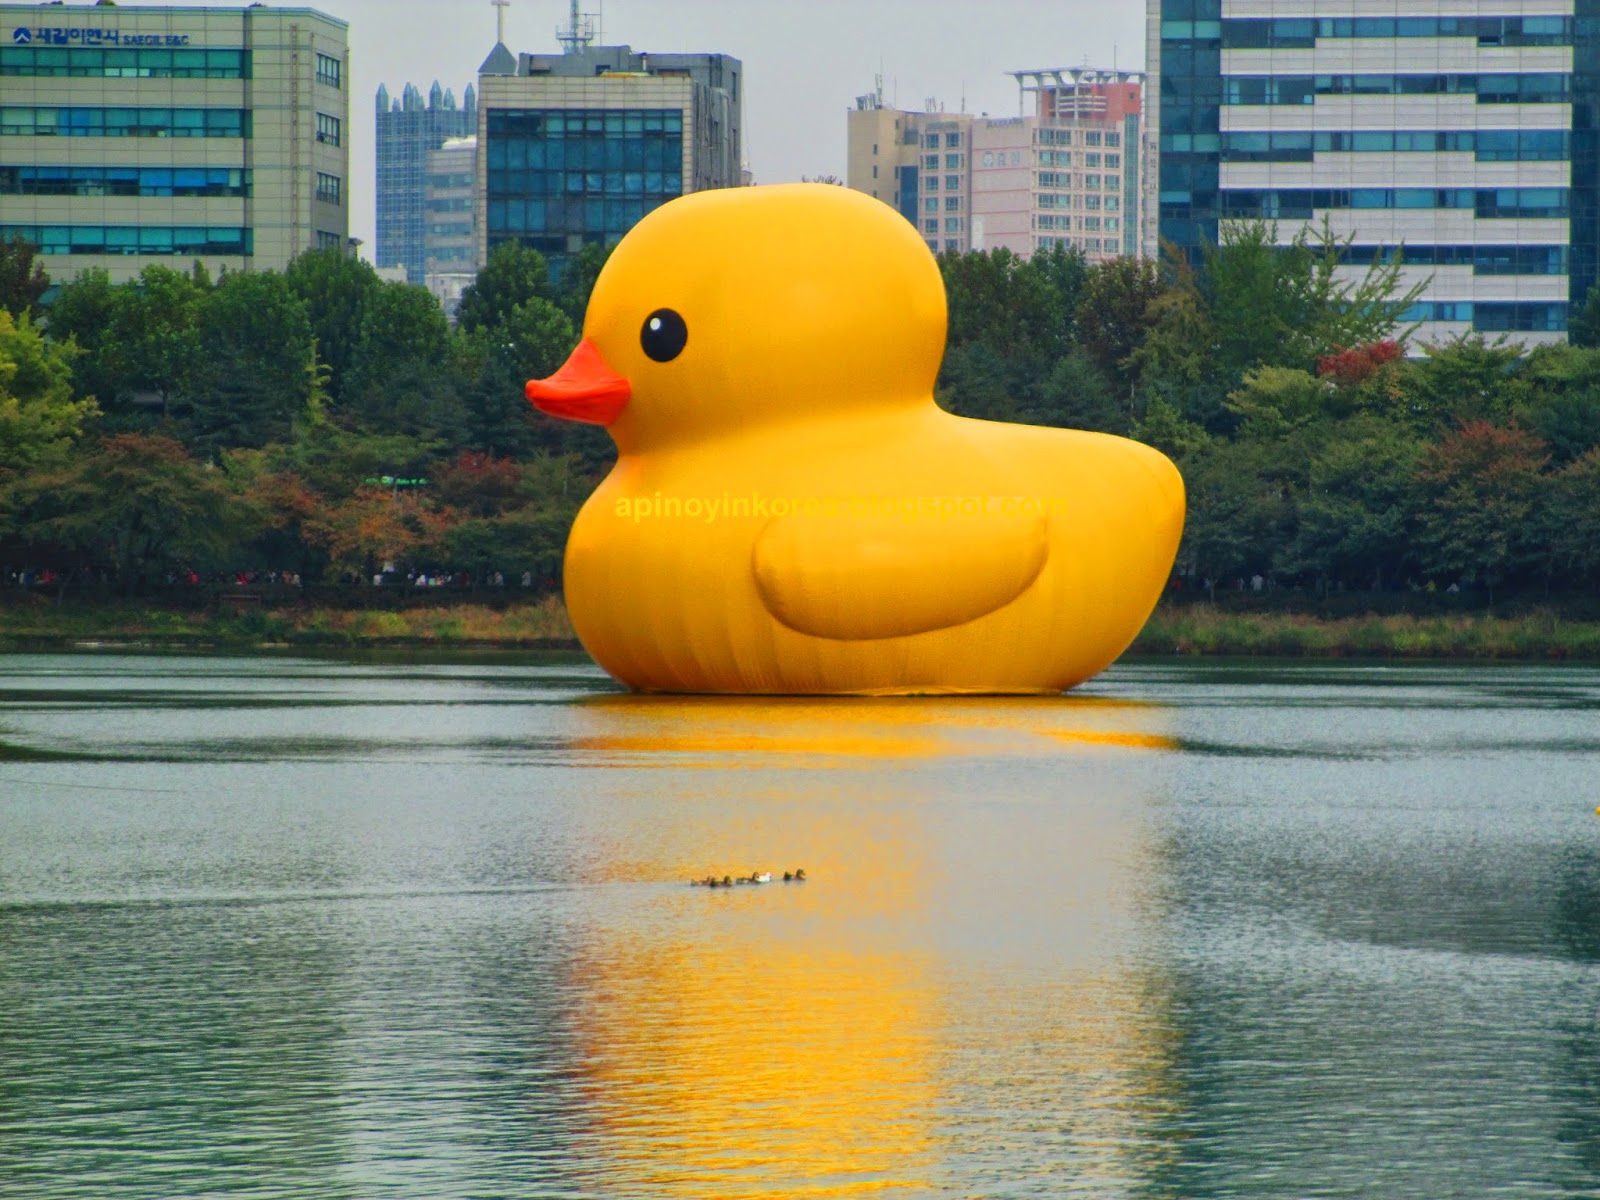 A Pinoy in Korea: A Yellow Rubber Duck On Seoul's Seokchon Lake